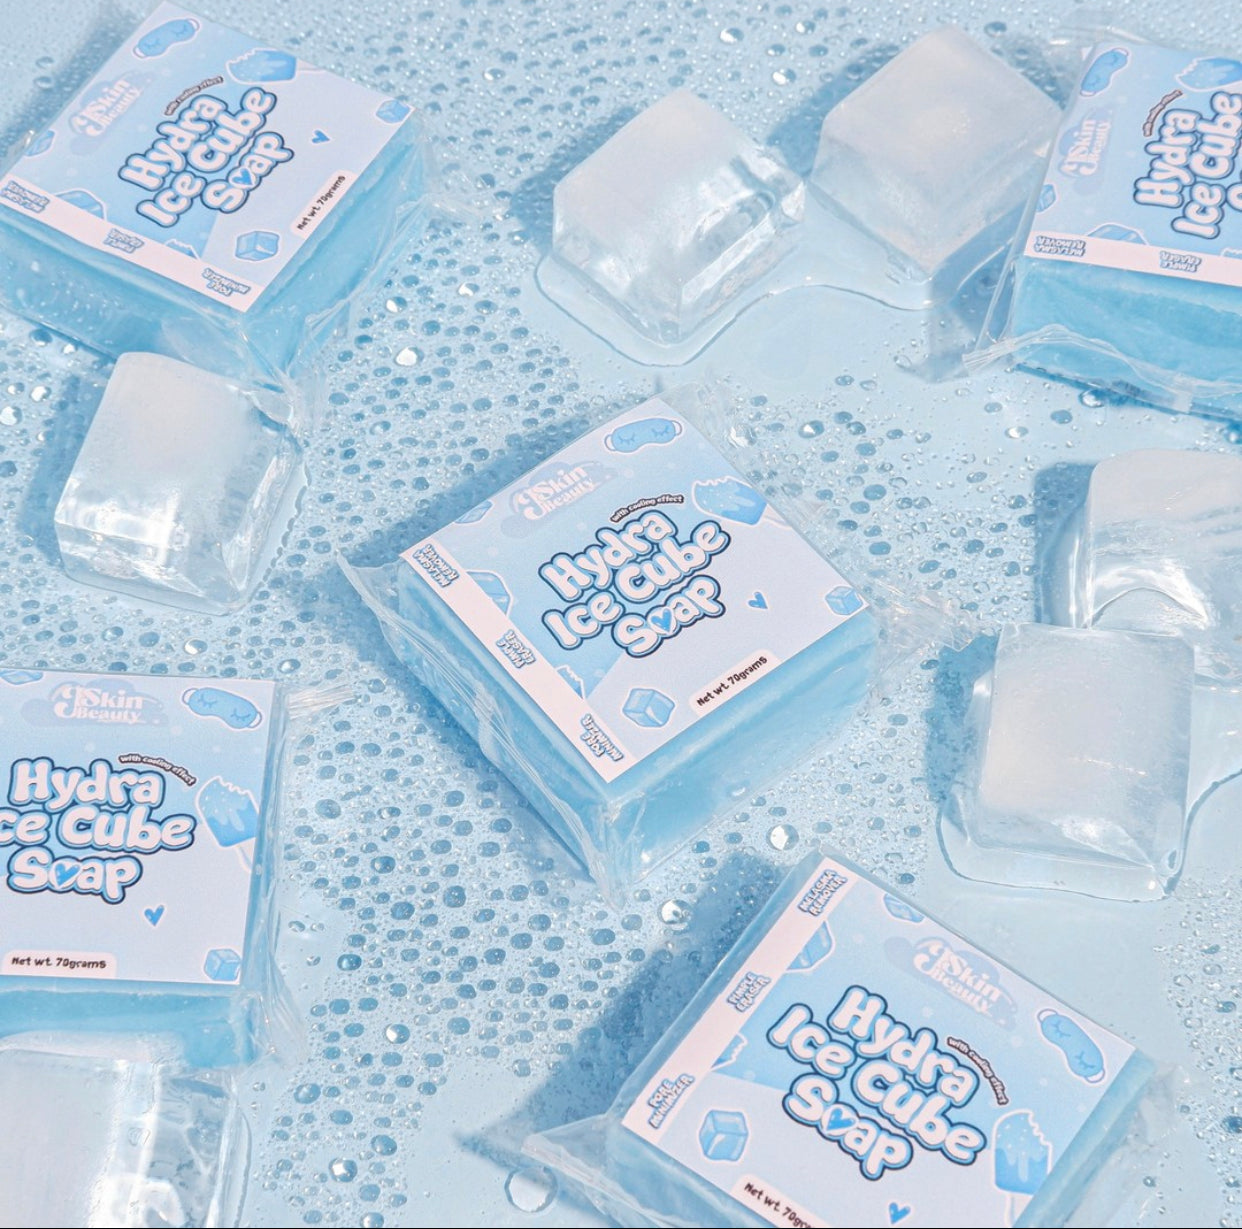 JSKIN BEAUTY HYDRA ICE CUBE SOAP